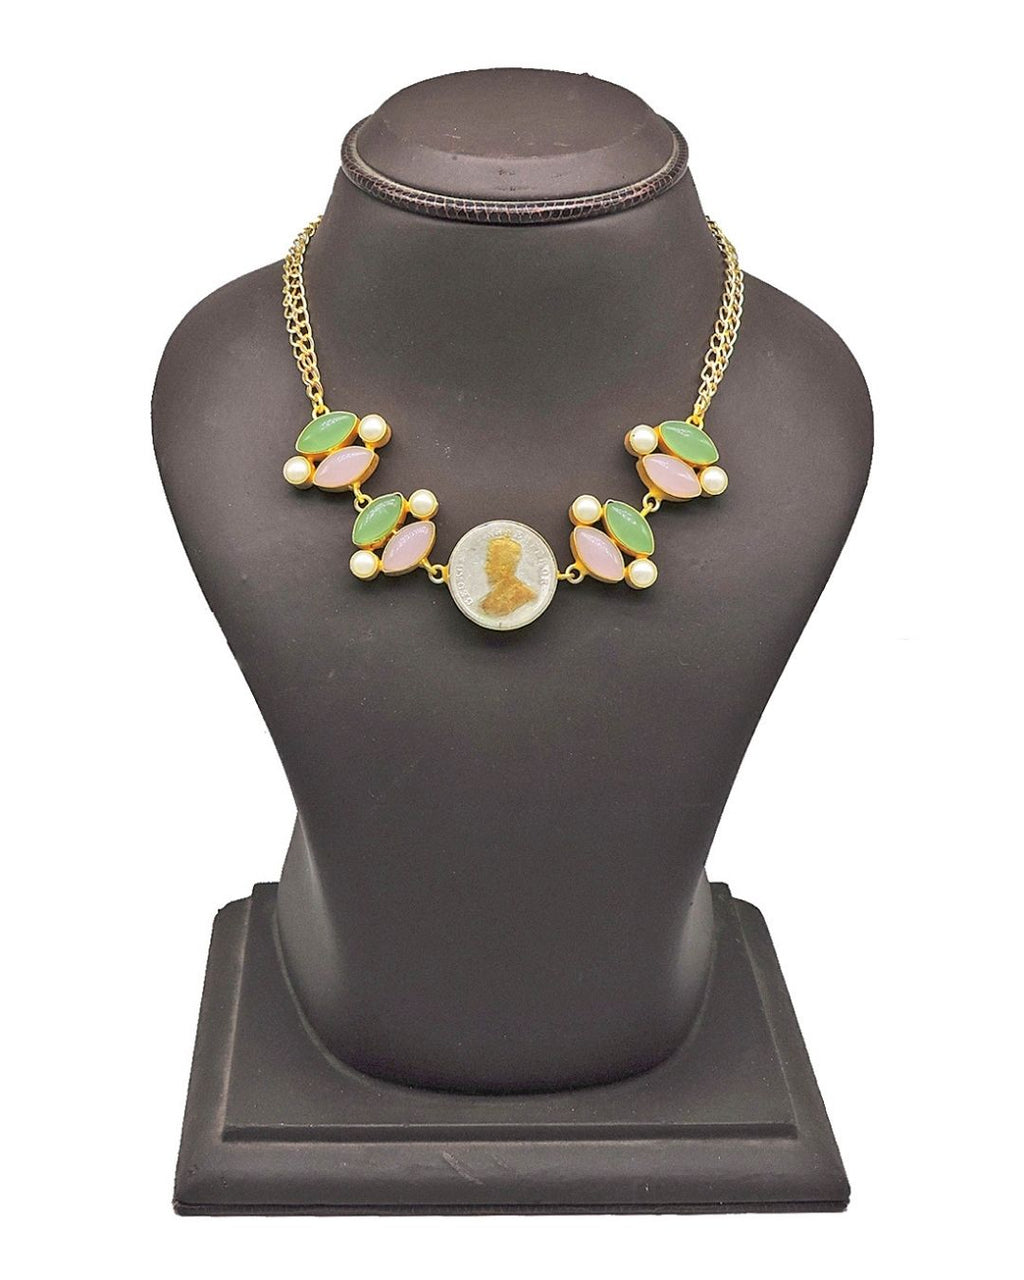 Ariya Necklace - Necklaces - Handcrafted Jewellery - Made in India - Dubai Jewellery, Fashion & Lifestyle - Dori